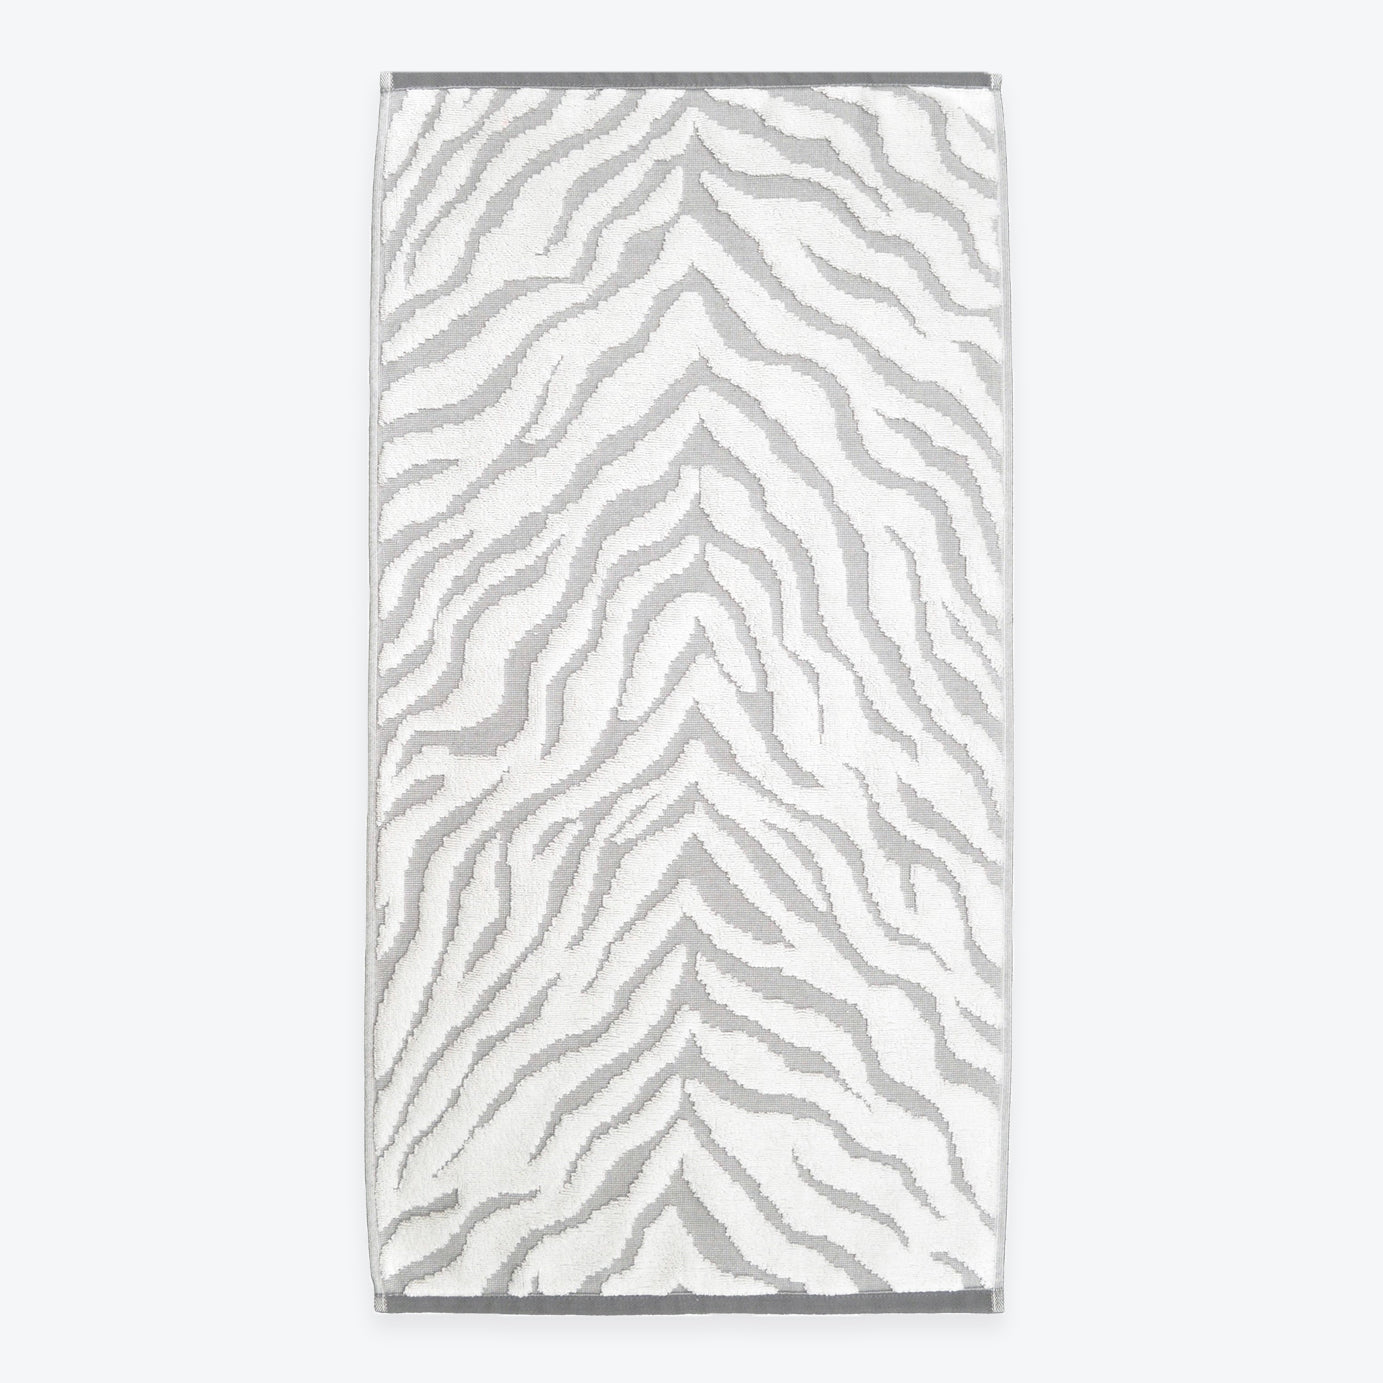 Zebra Printed Towel - Grey and White